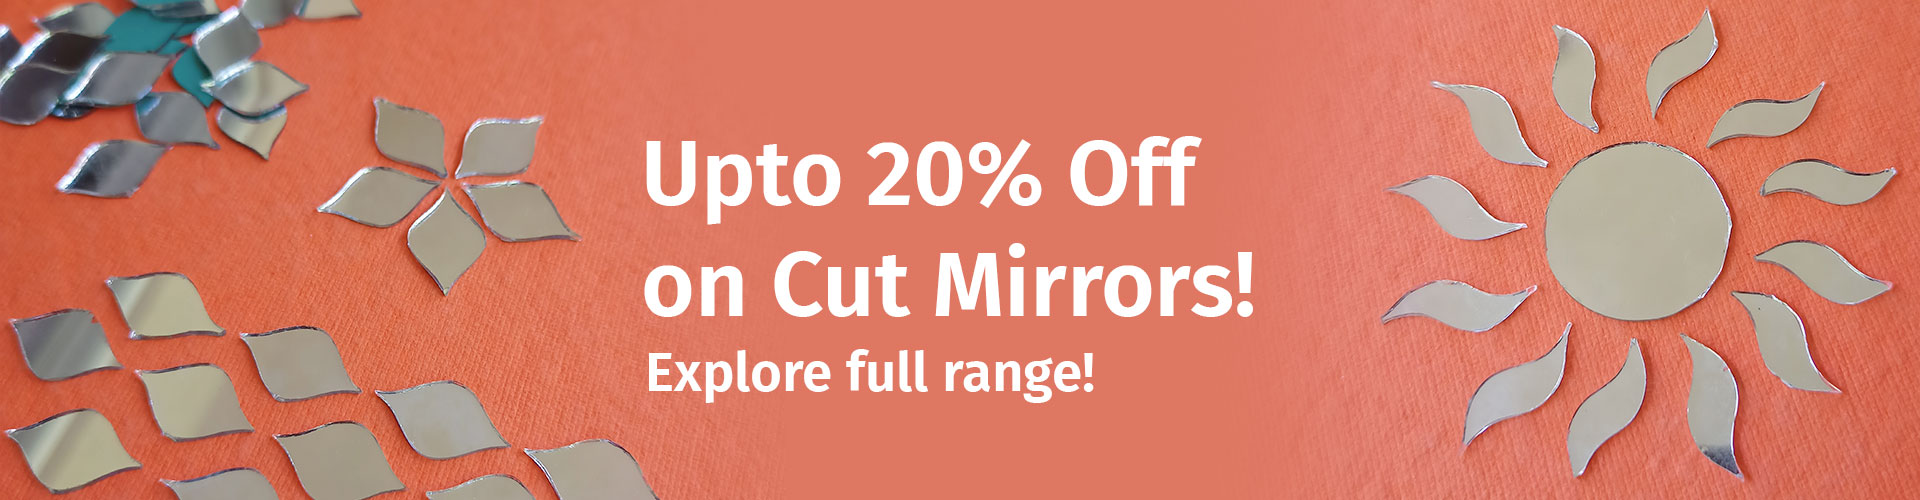 Cut Mirrors